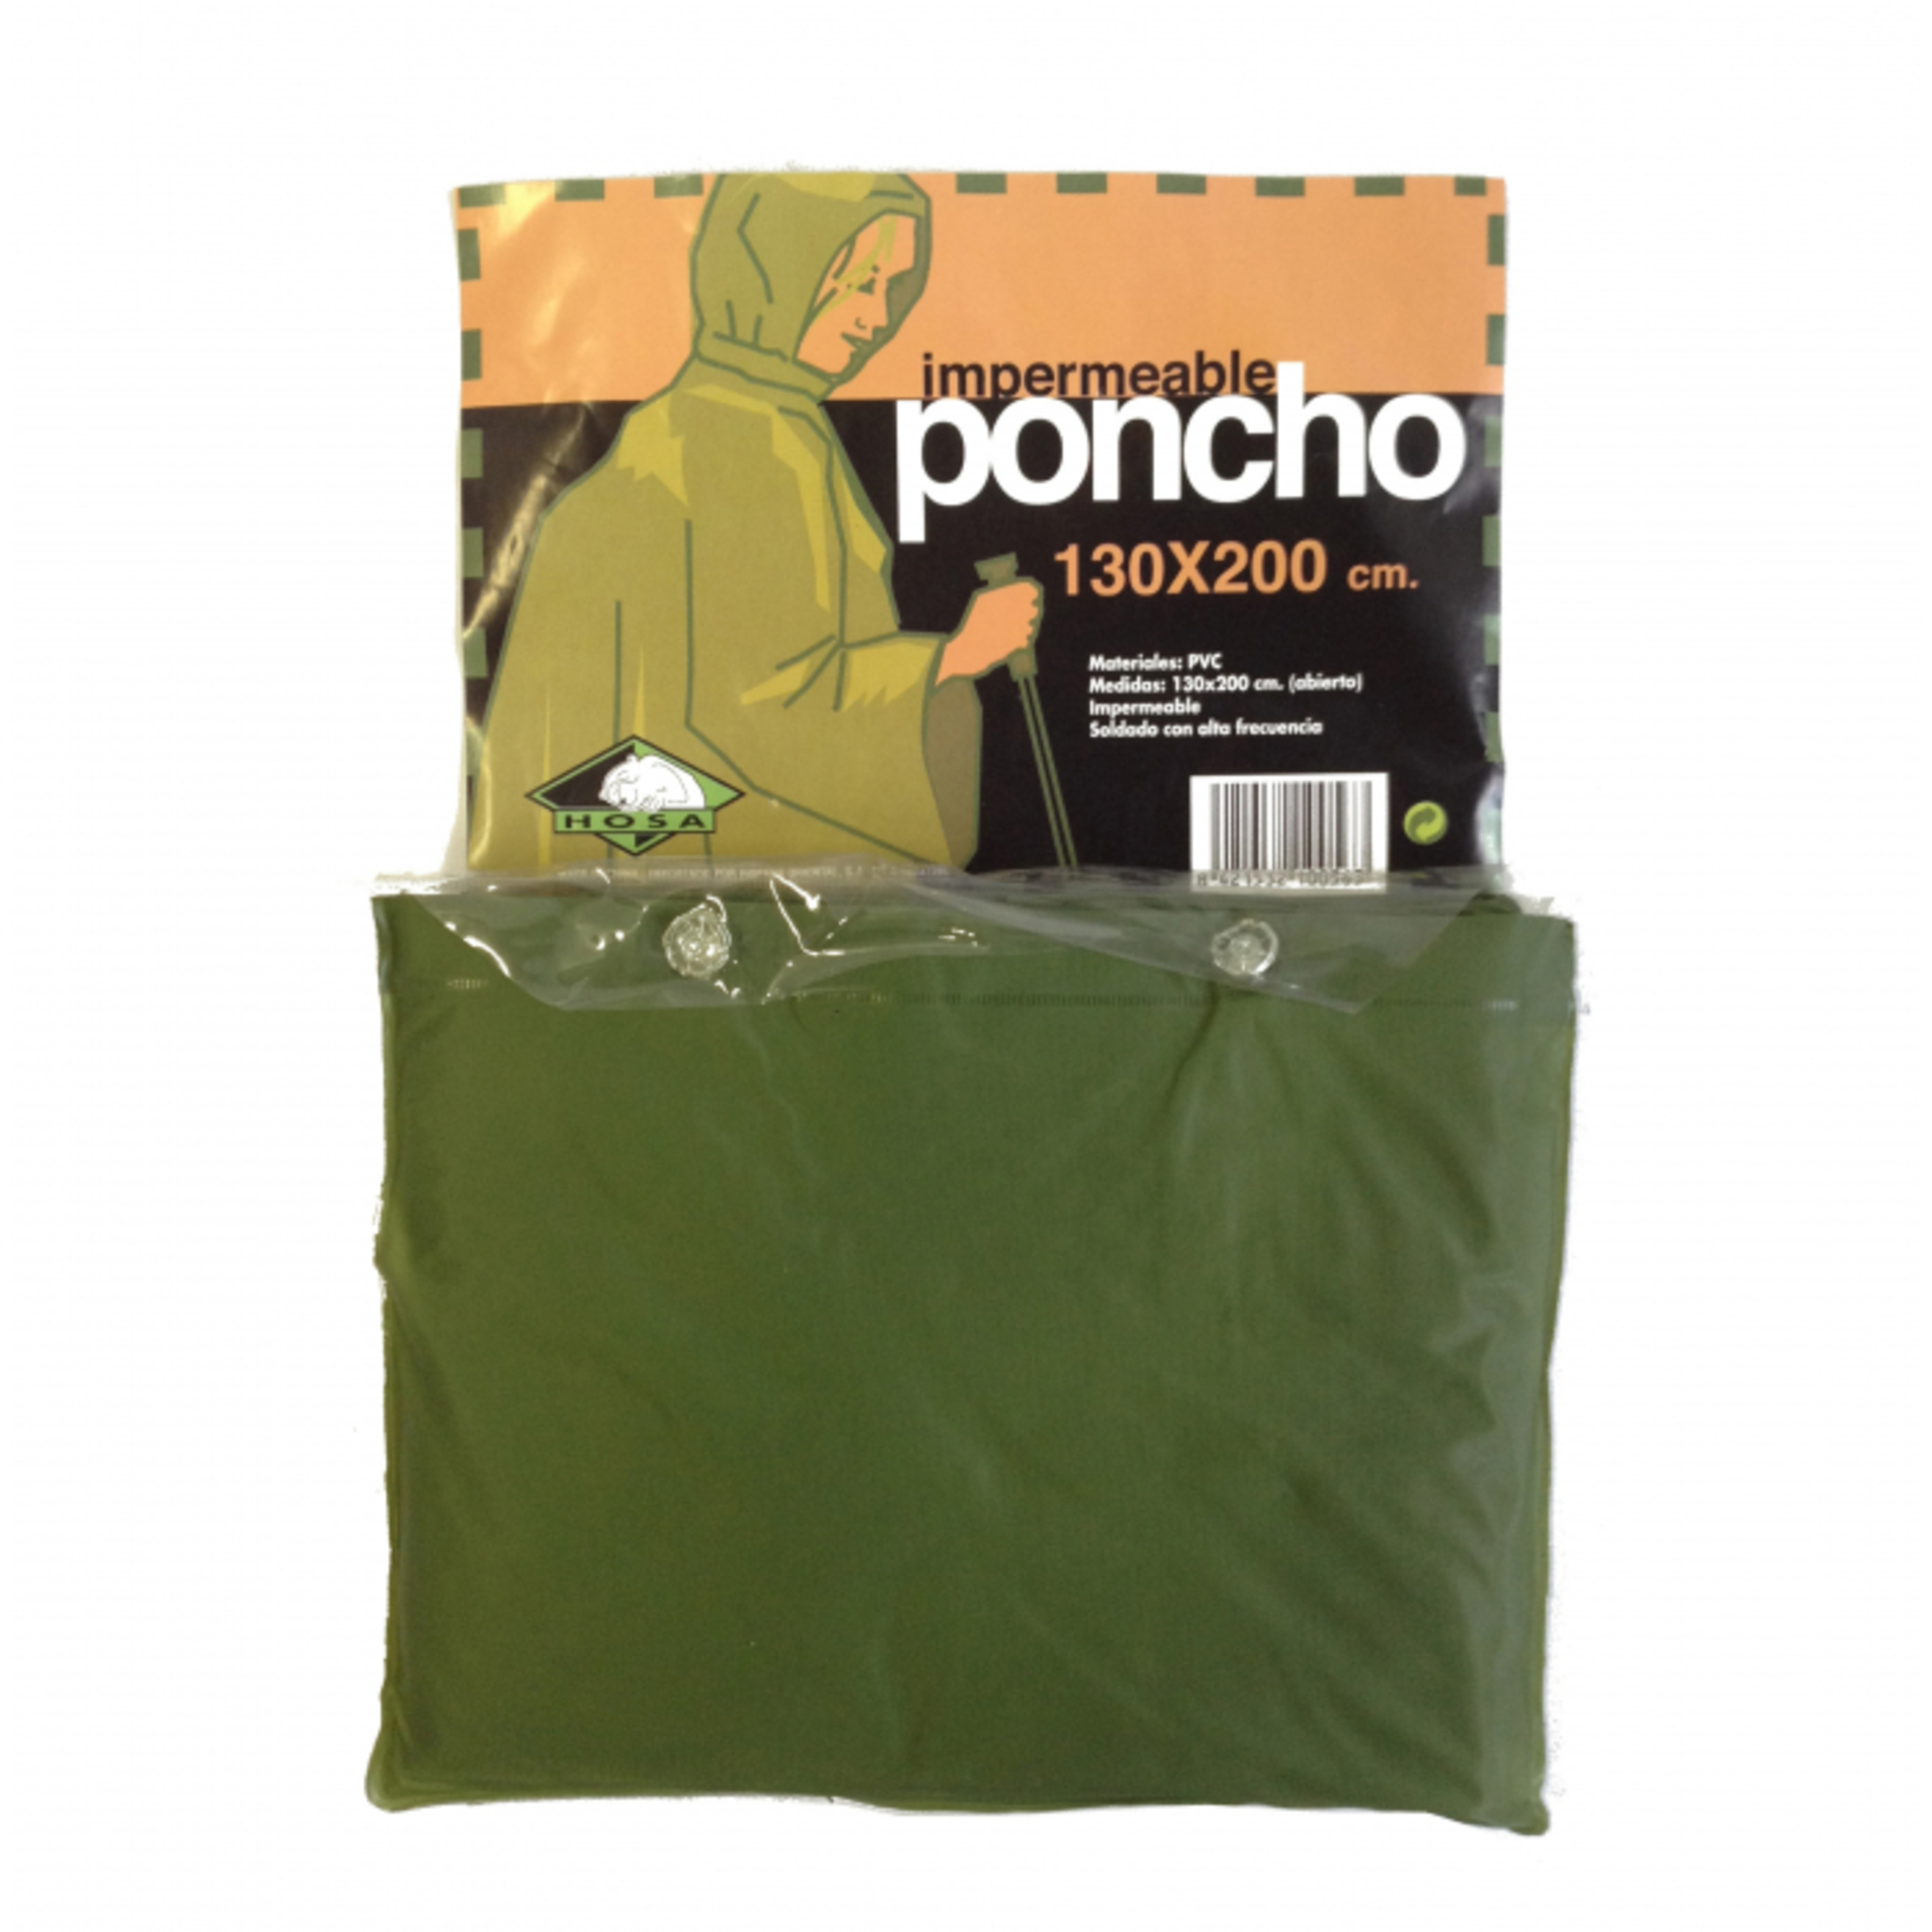 Poncho Impermeable Hosa Pvc Rain Poncho